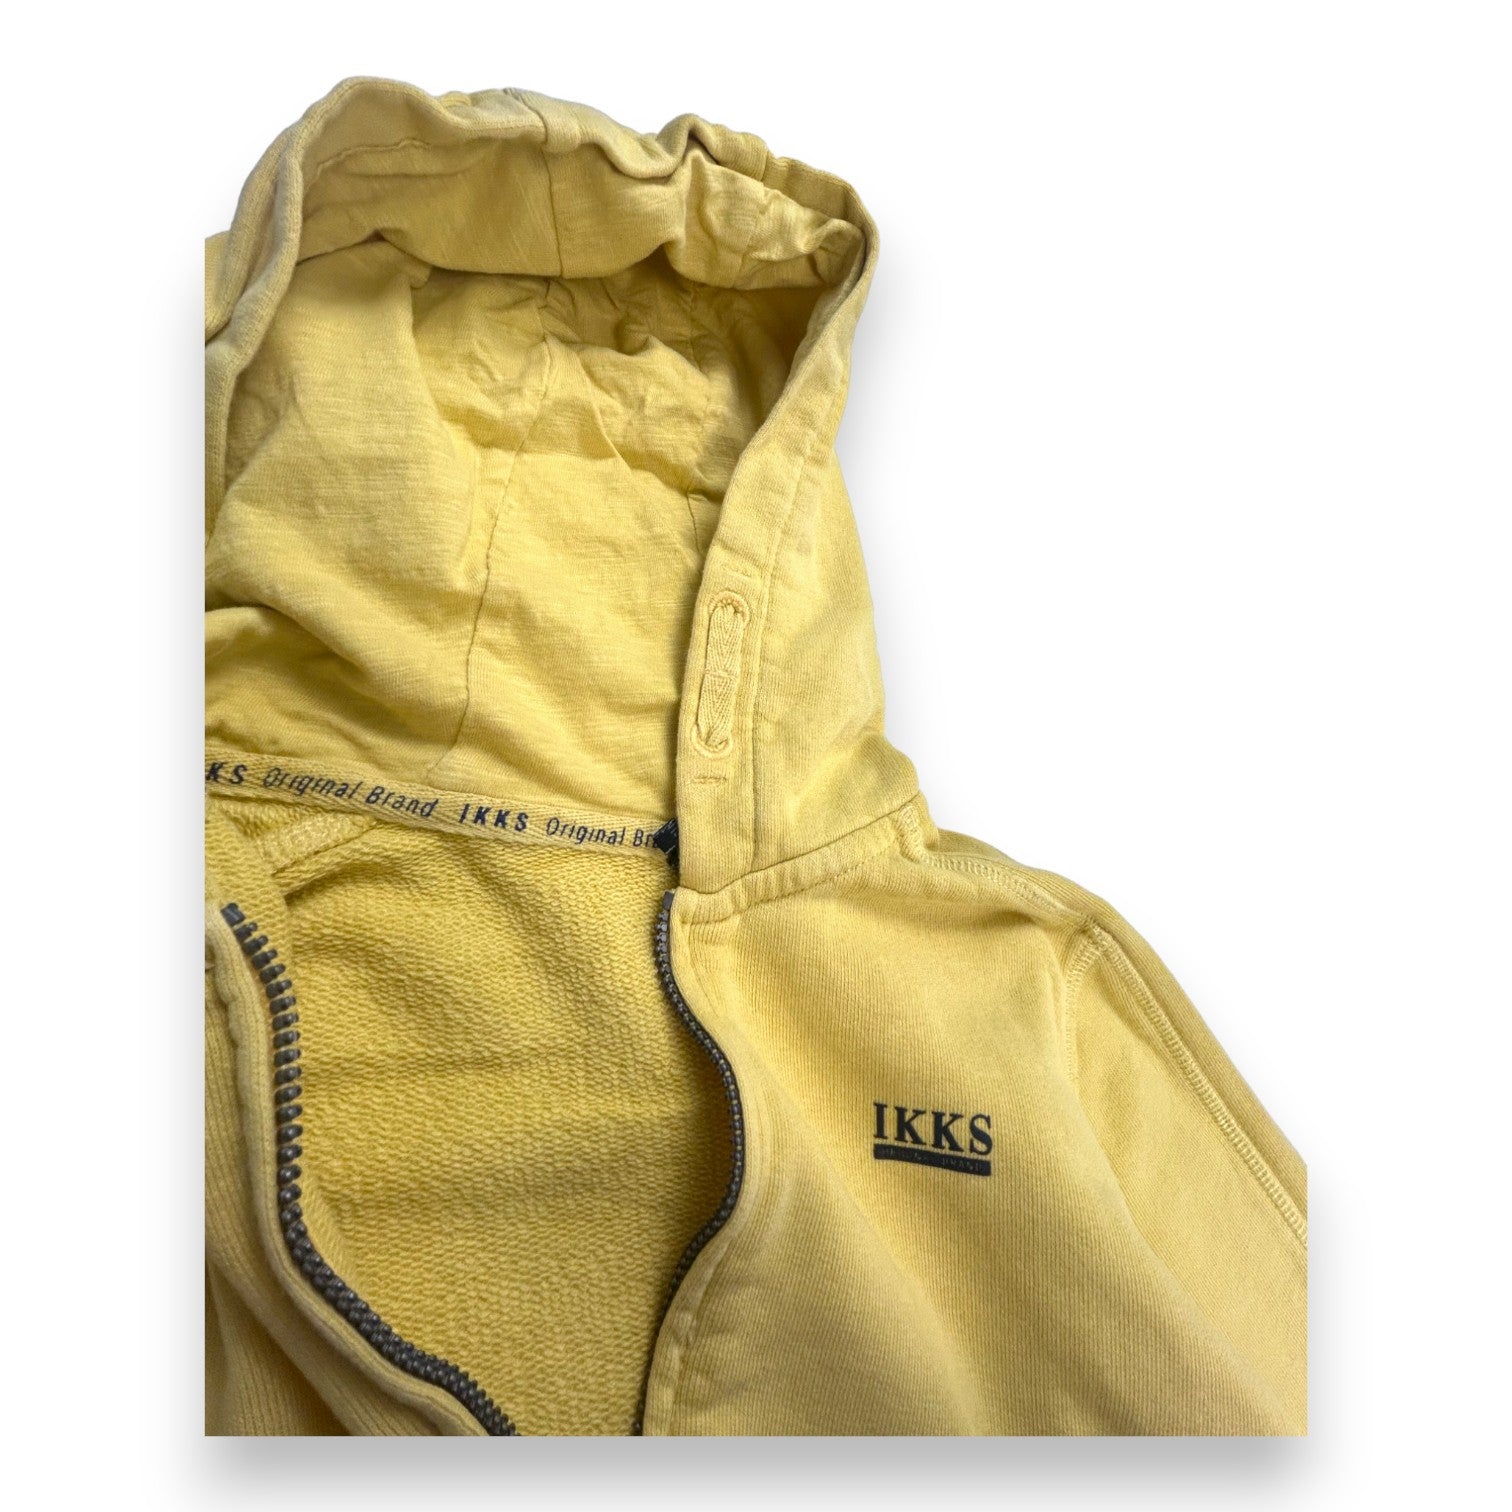 IKKS - Veste jaune à zip - 6 ans